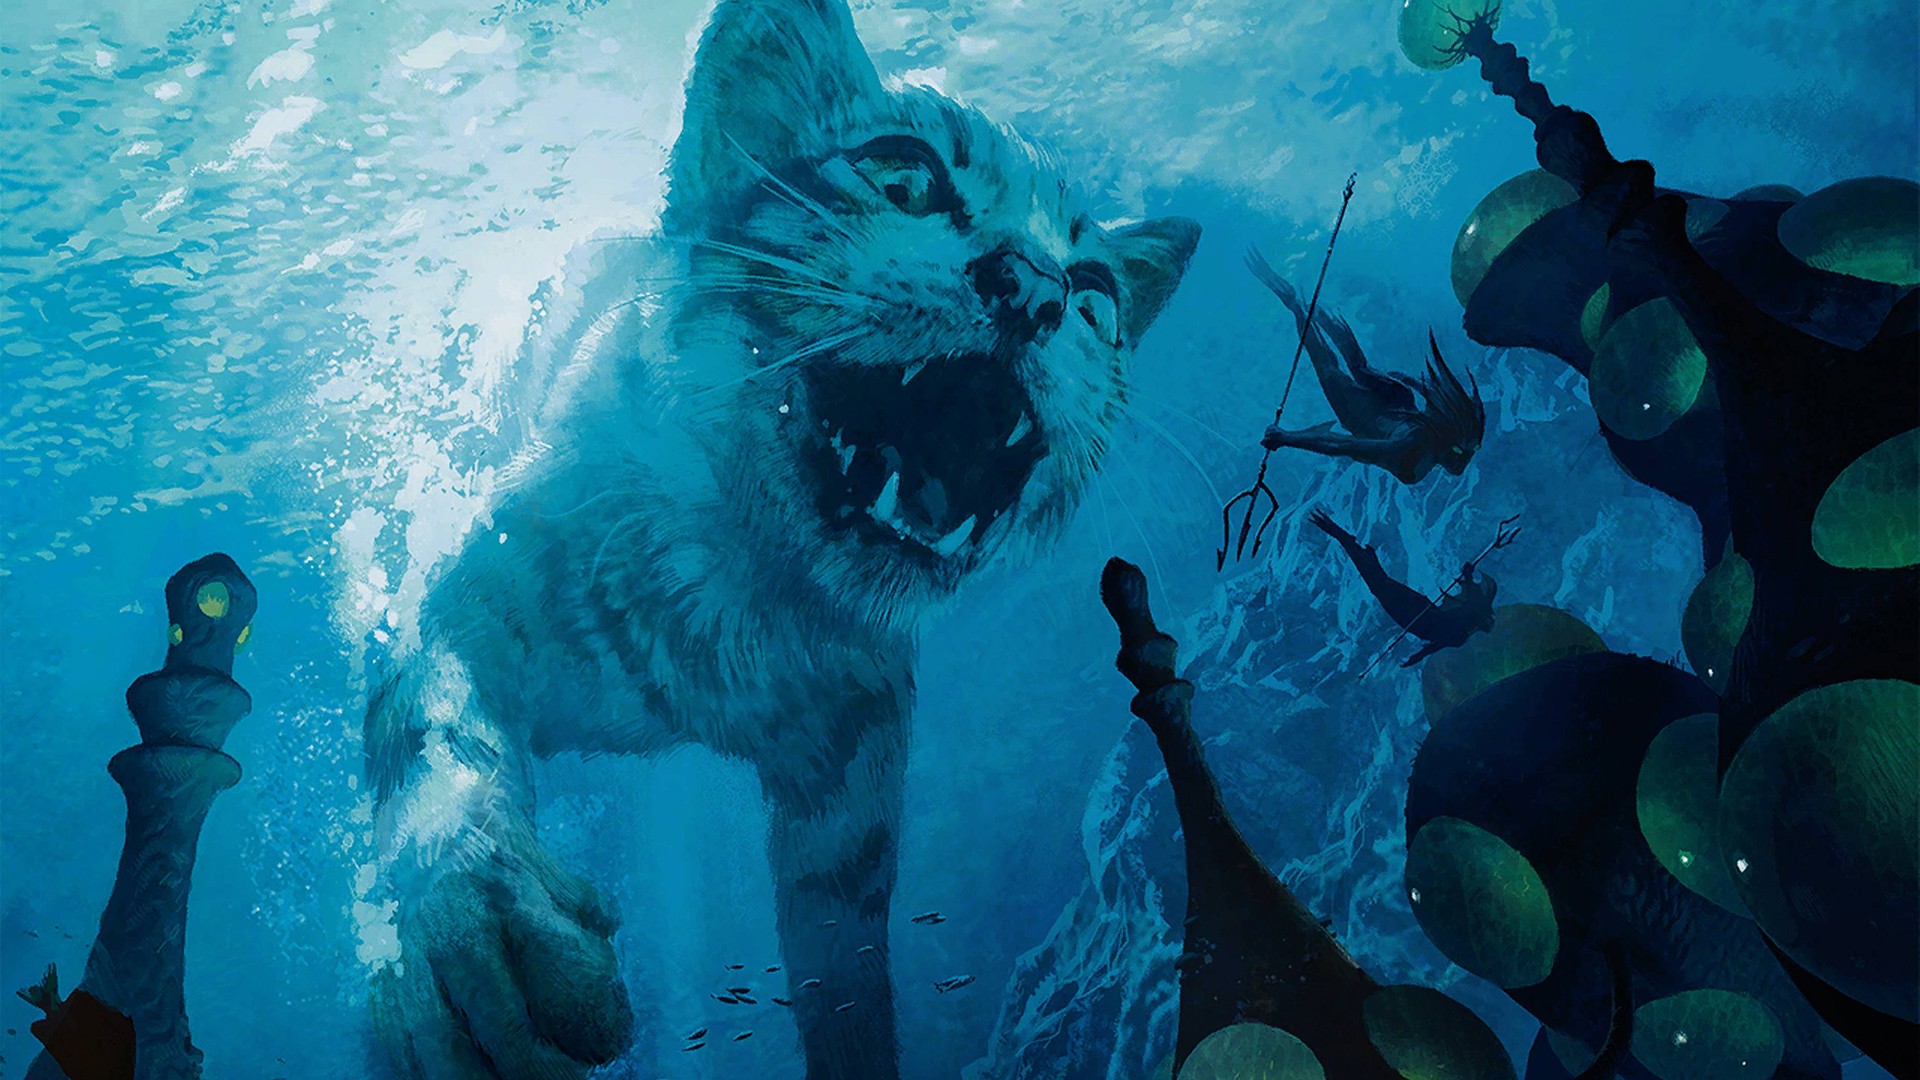 fantasy art, Underwater, Magic: The Gathering Wallpaper